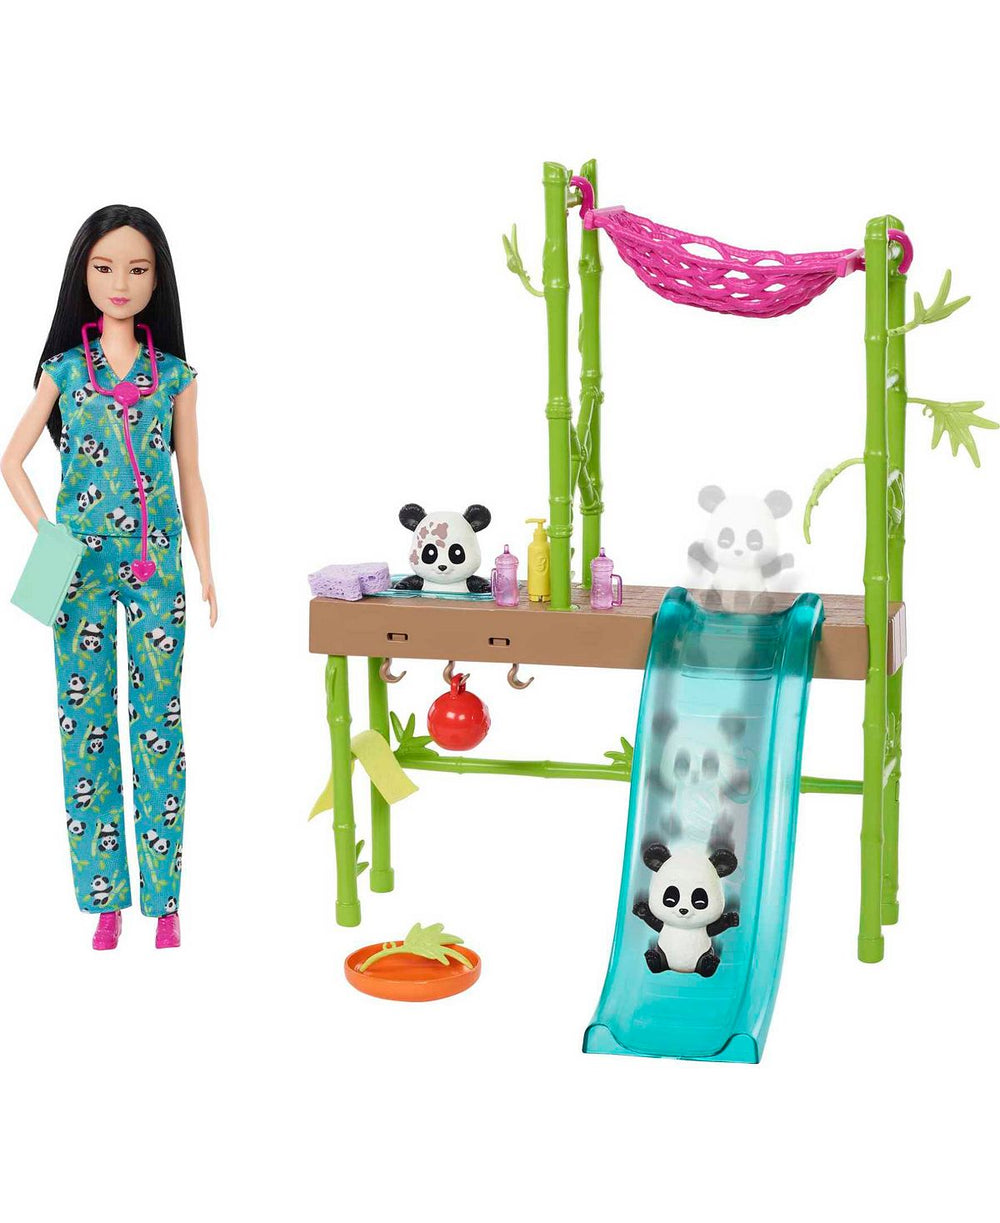 Barbie Panda Rescue Playset - Interactive Vet Care Station